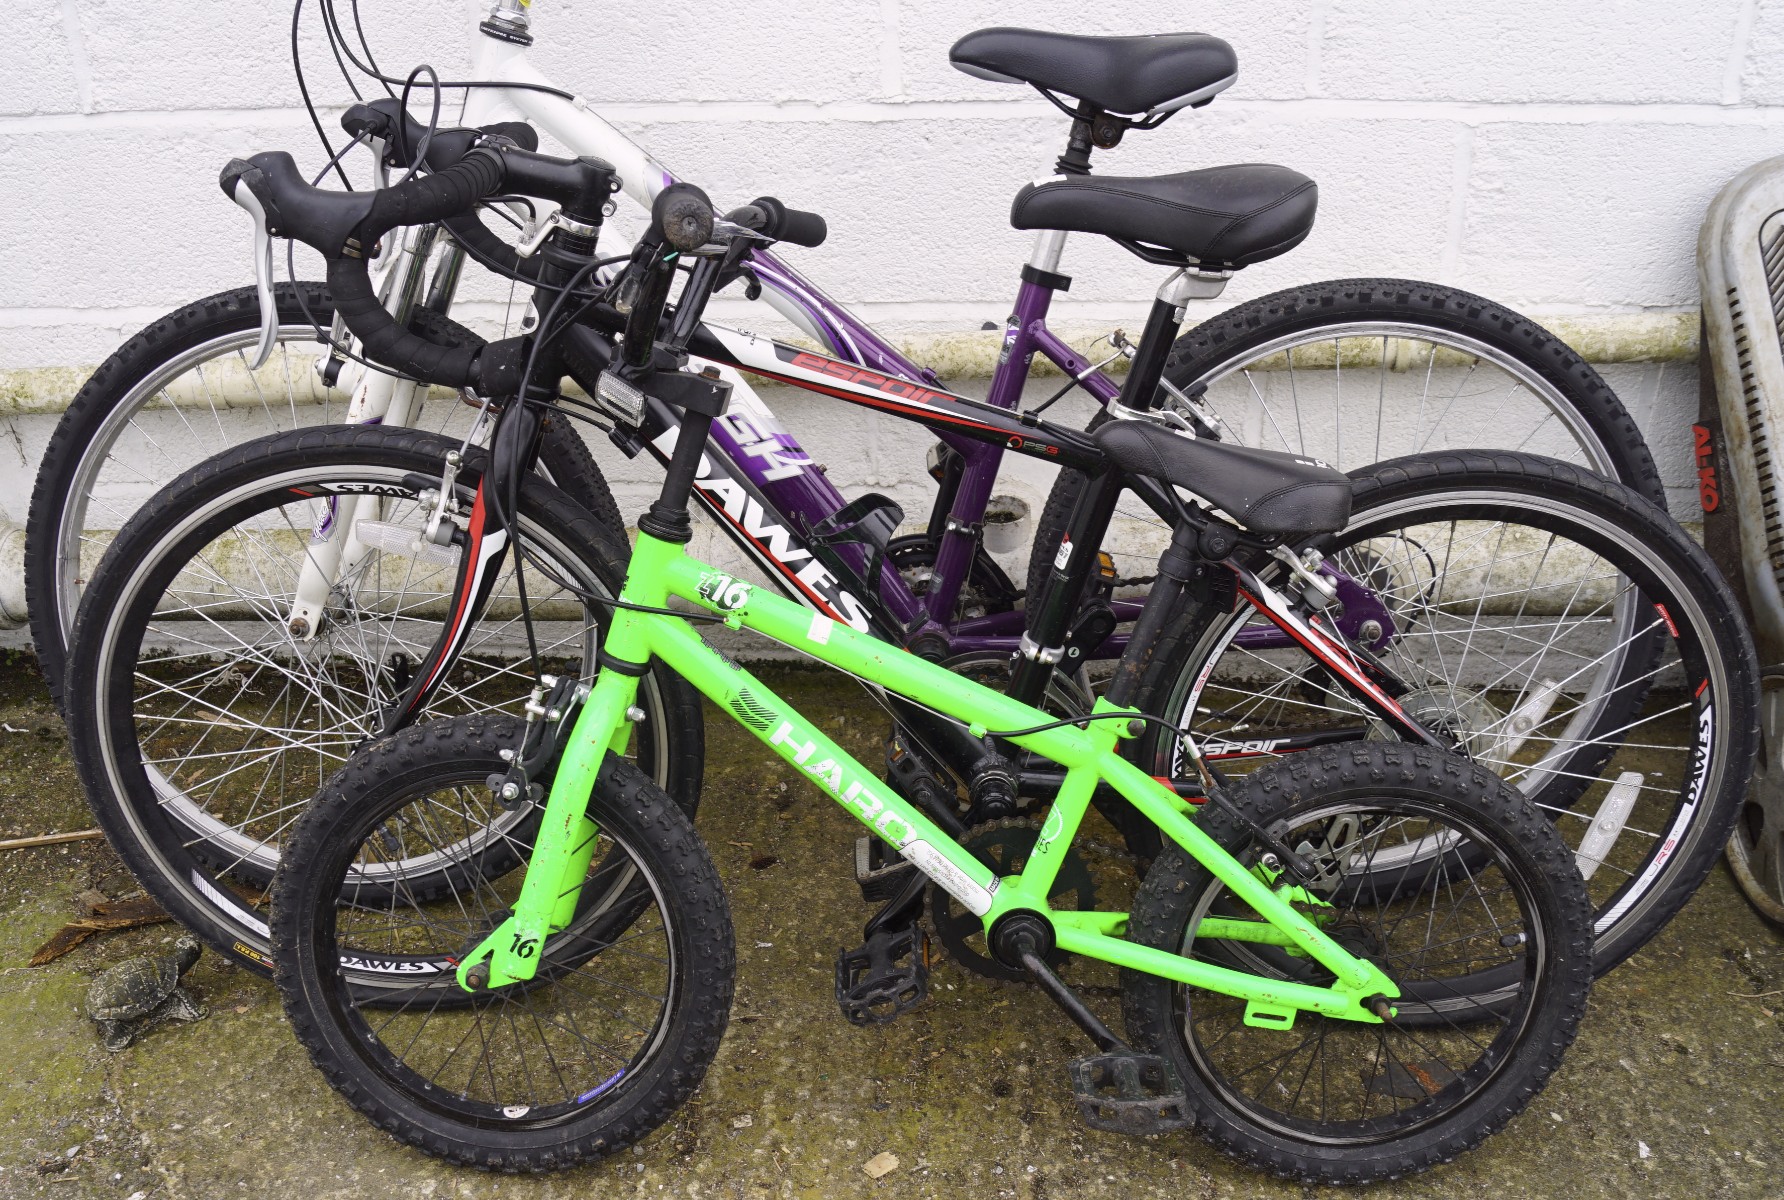 Three push bikes, to include a Dawes espoir racing bike.